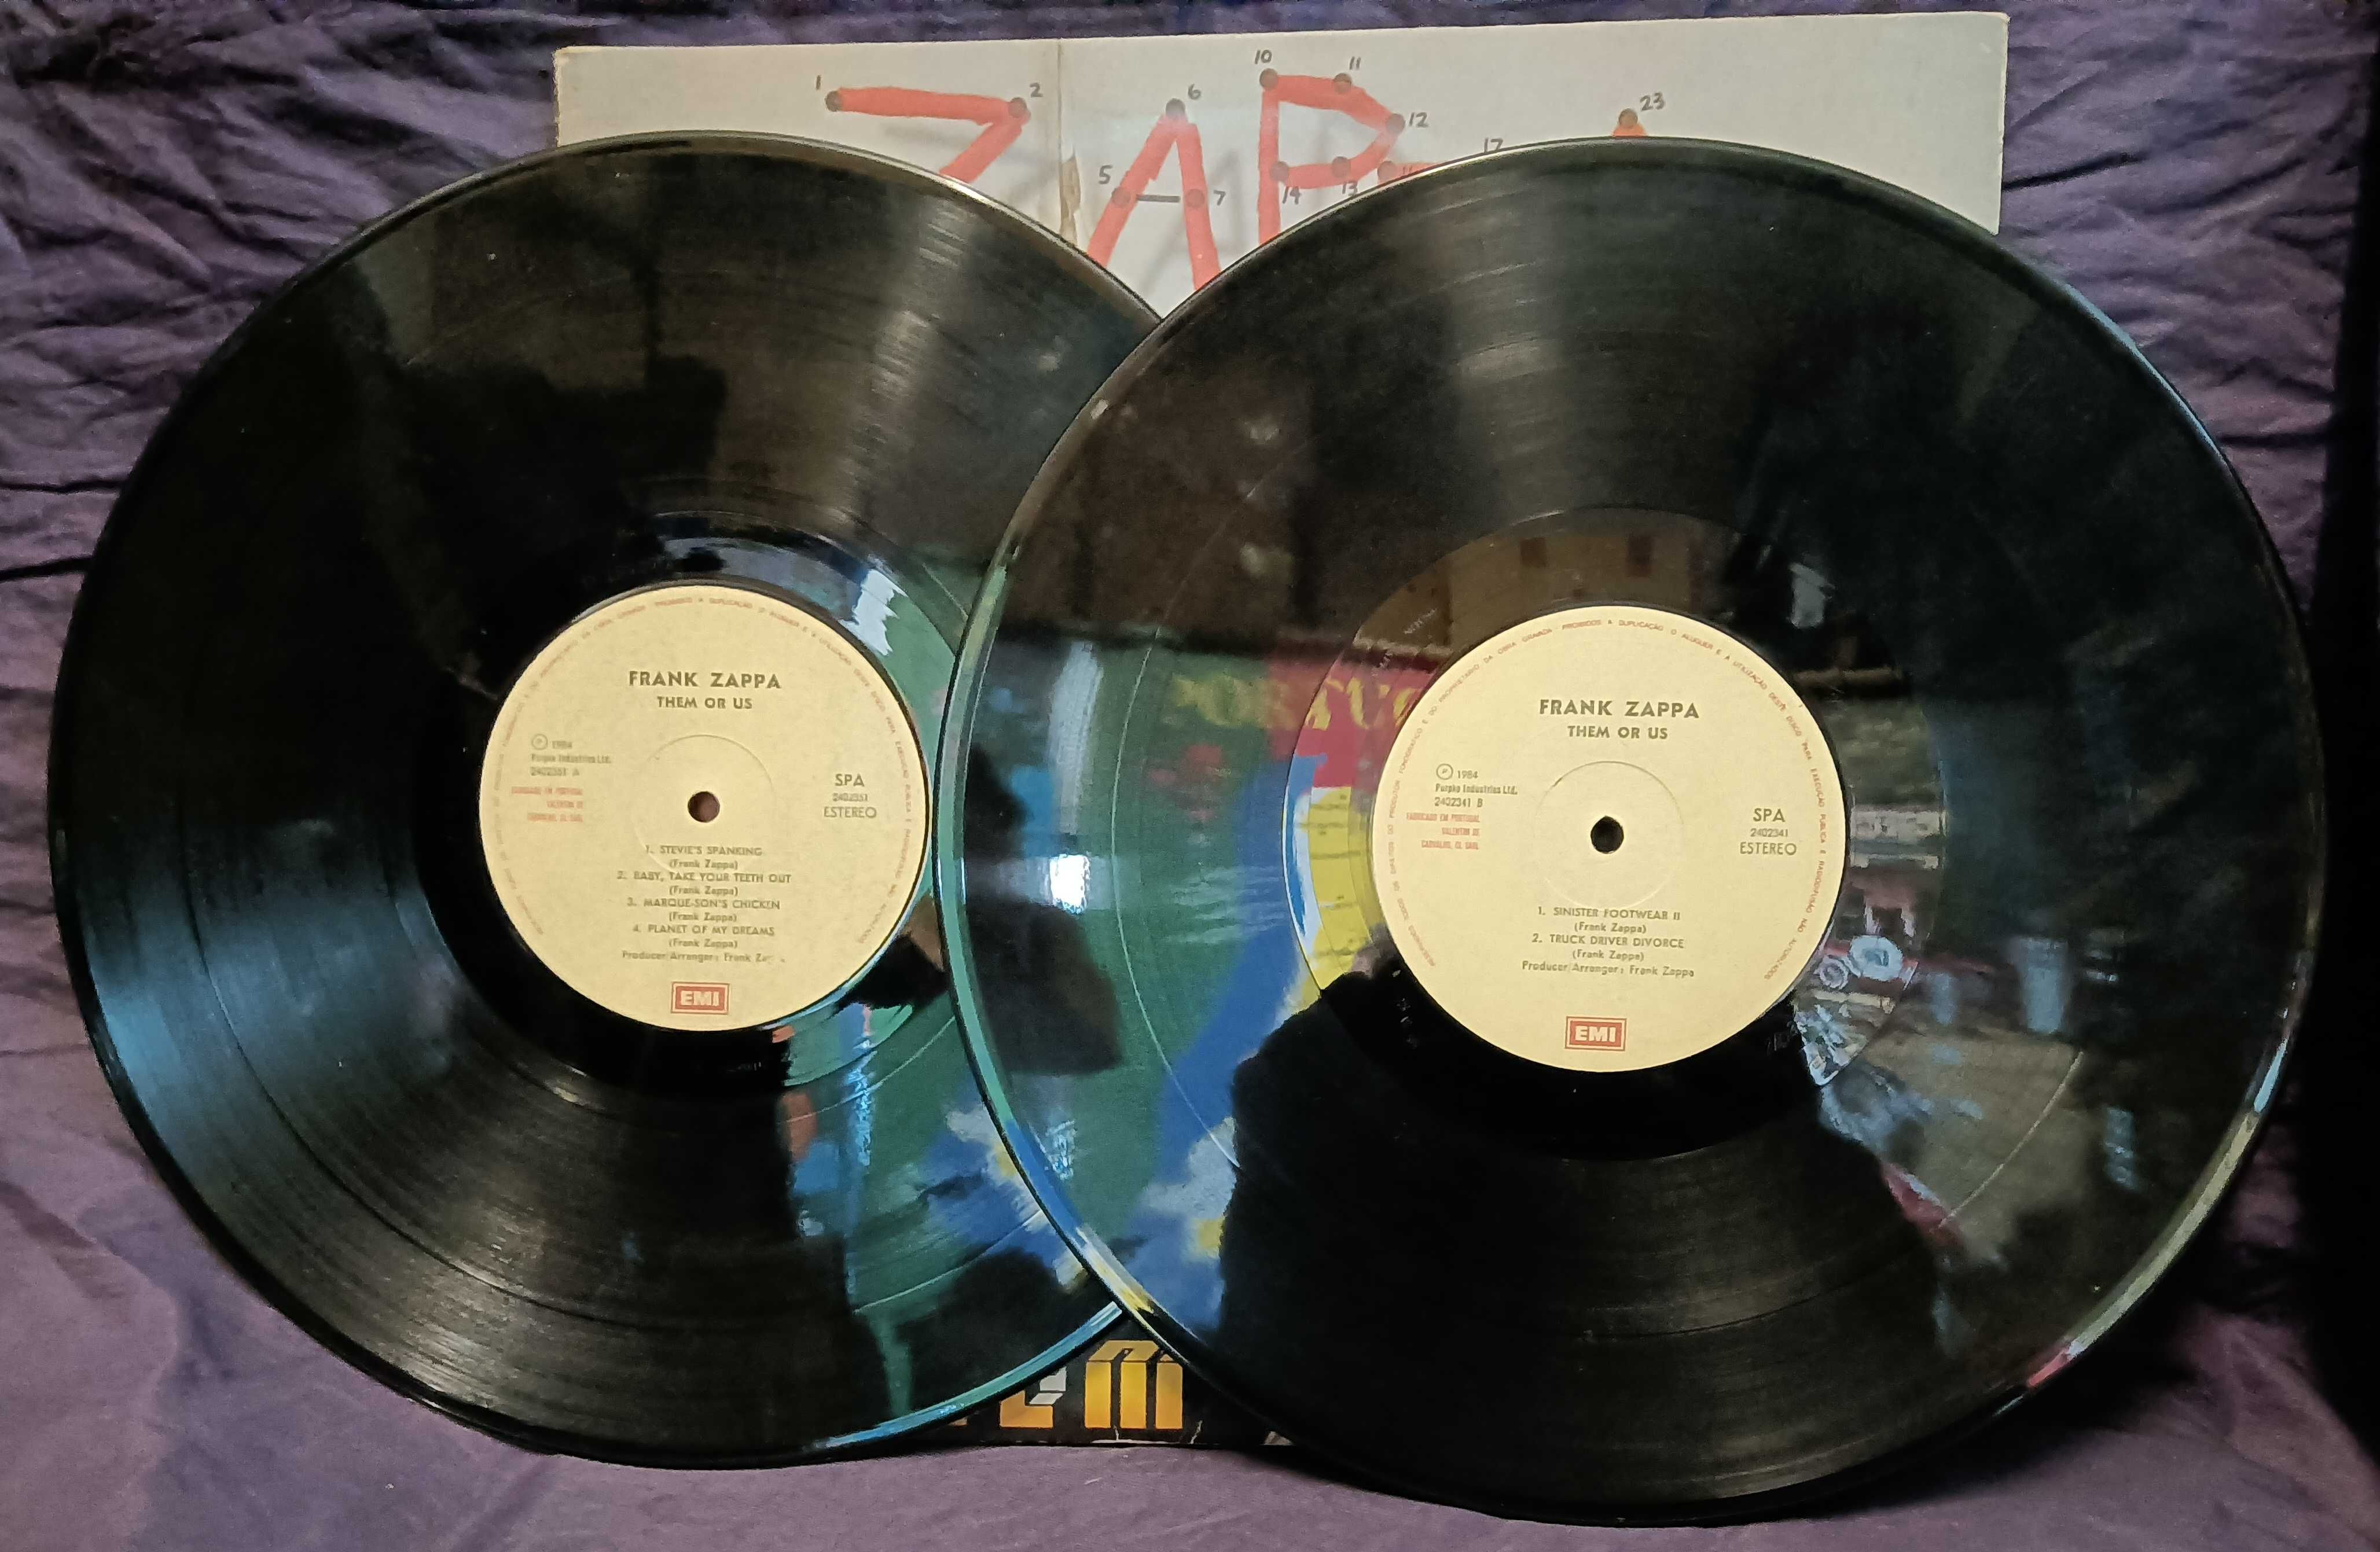 Gillan e Zappa 2 LPs duplos em vinil